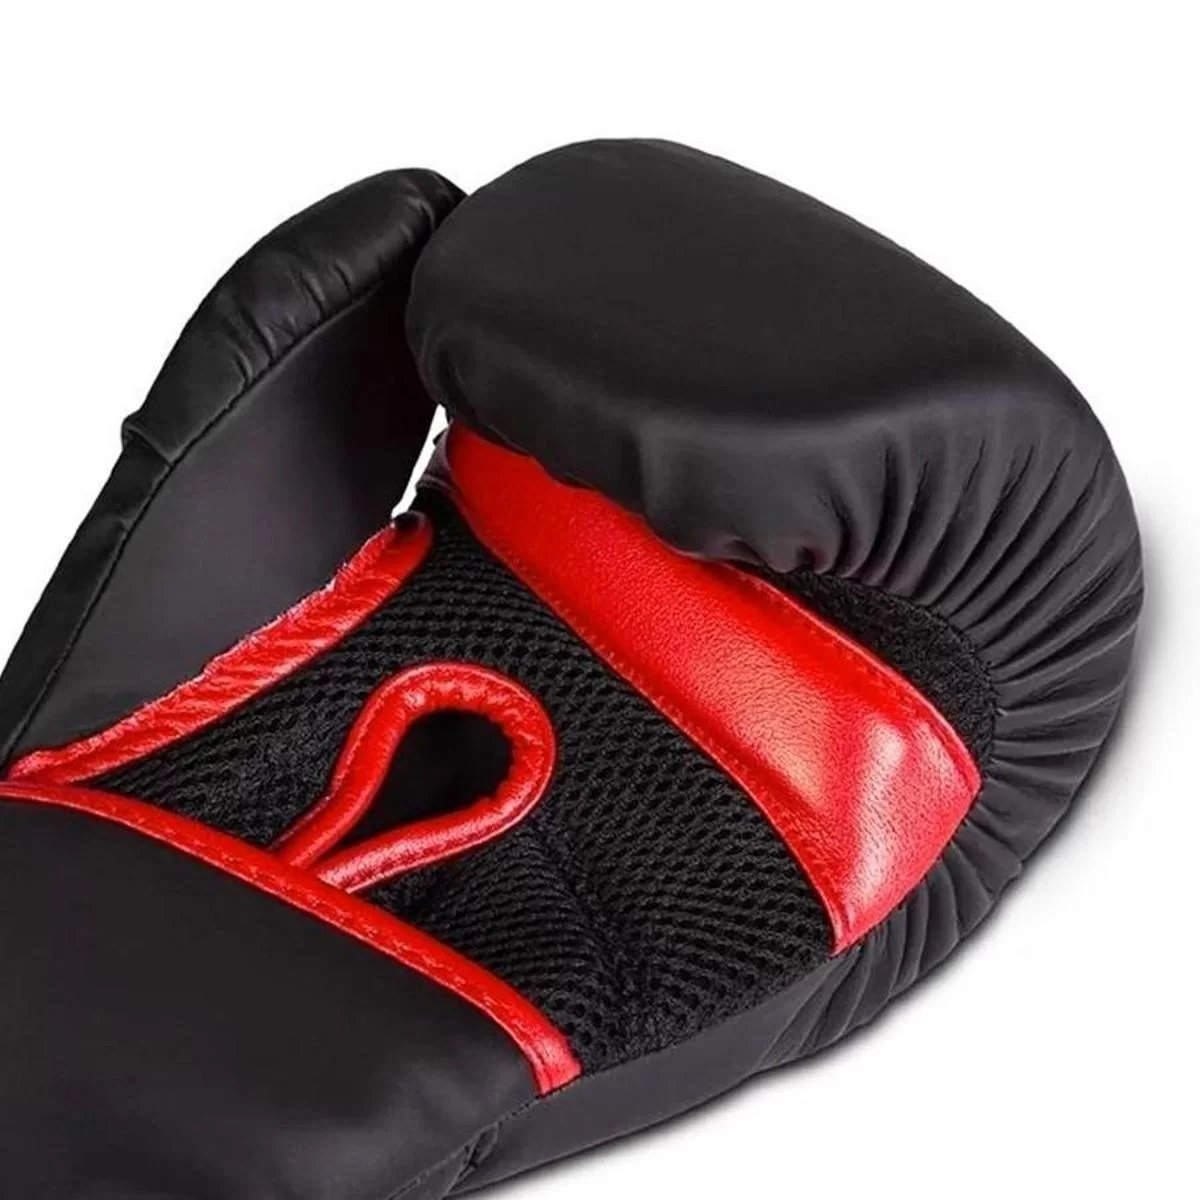 Kit Luva de Boxe Muay Thai - Naja Black Preto/vermelho + Bandagem+bucal:12/preto/vermelho - 4